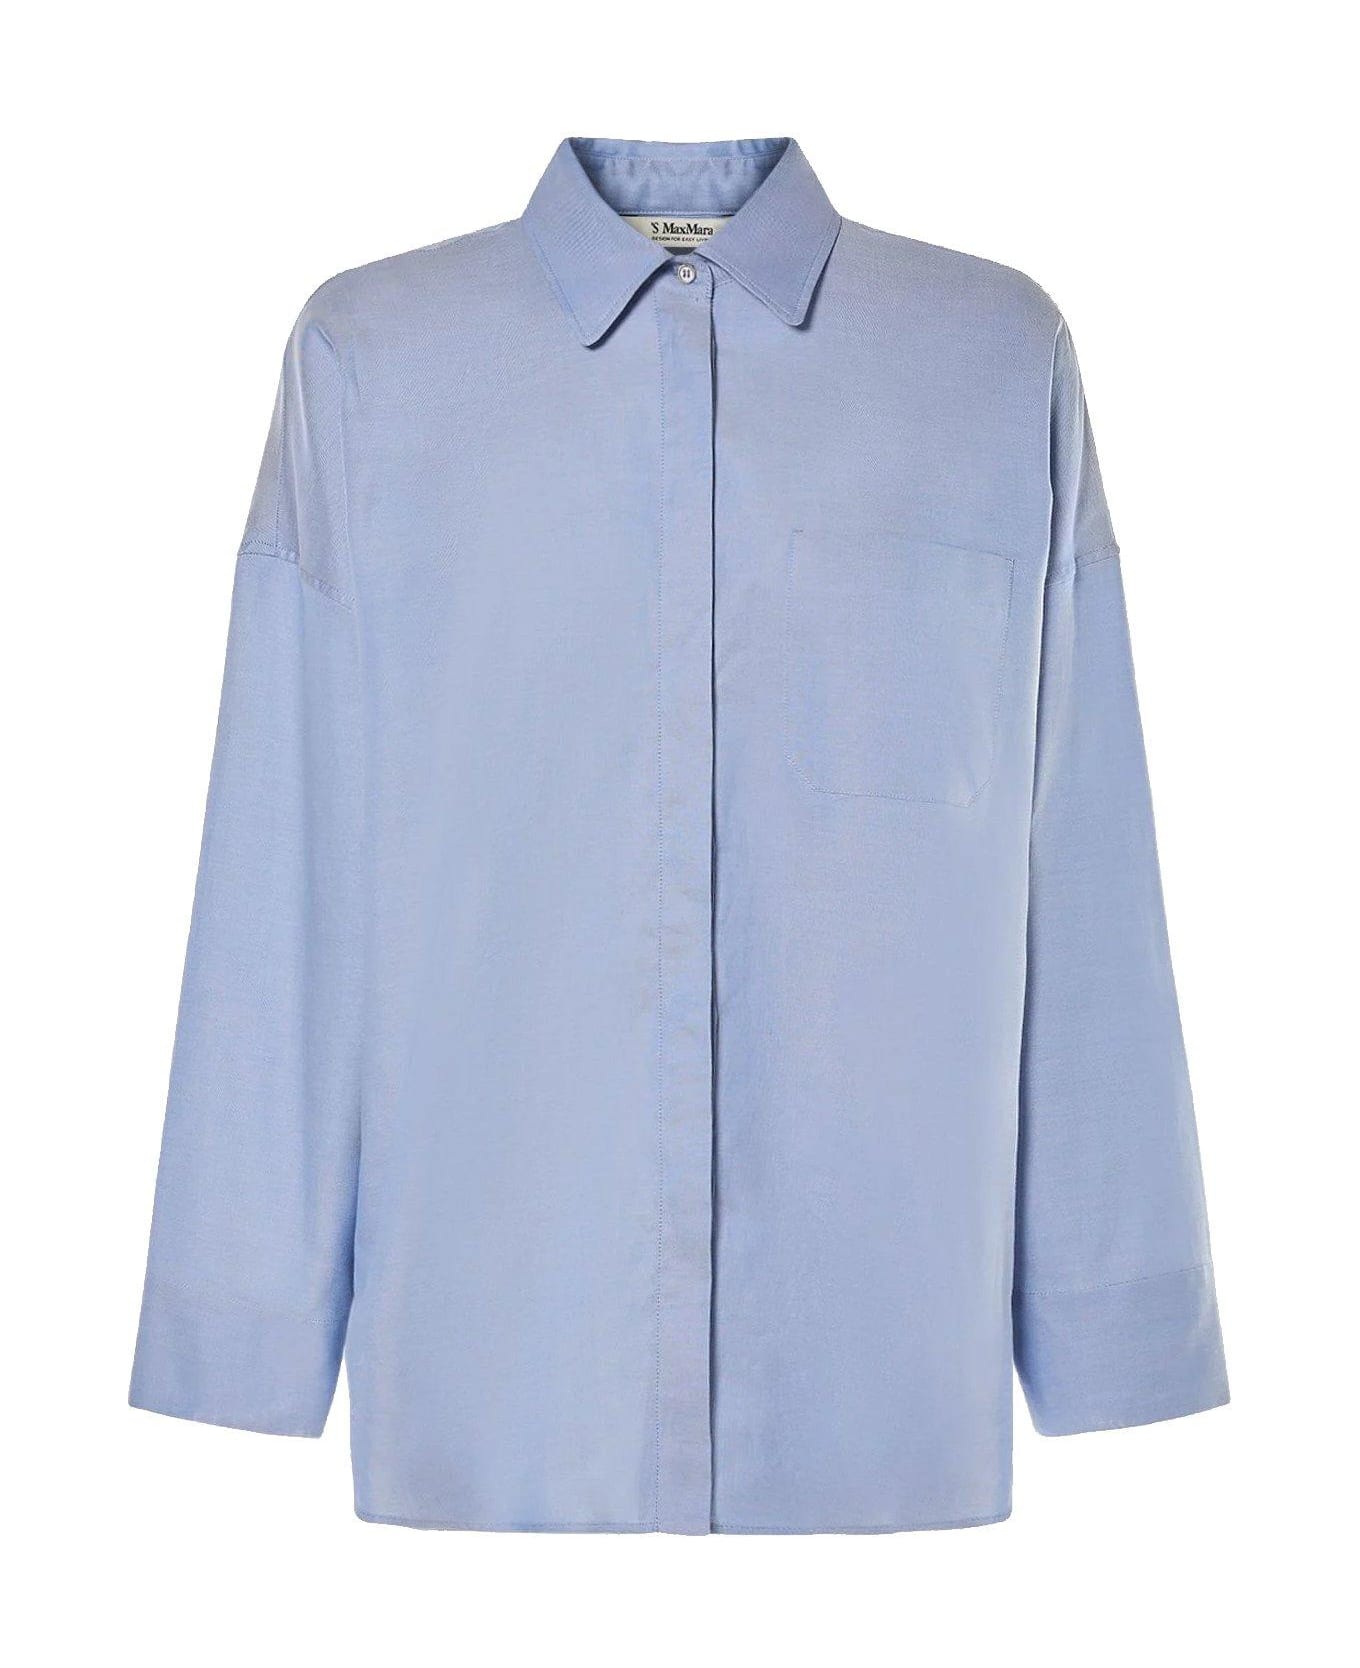 'S Max Mara Buttoned Long-sleeved Shirt - Light blue シャツ